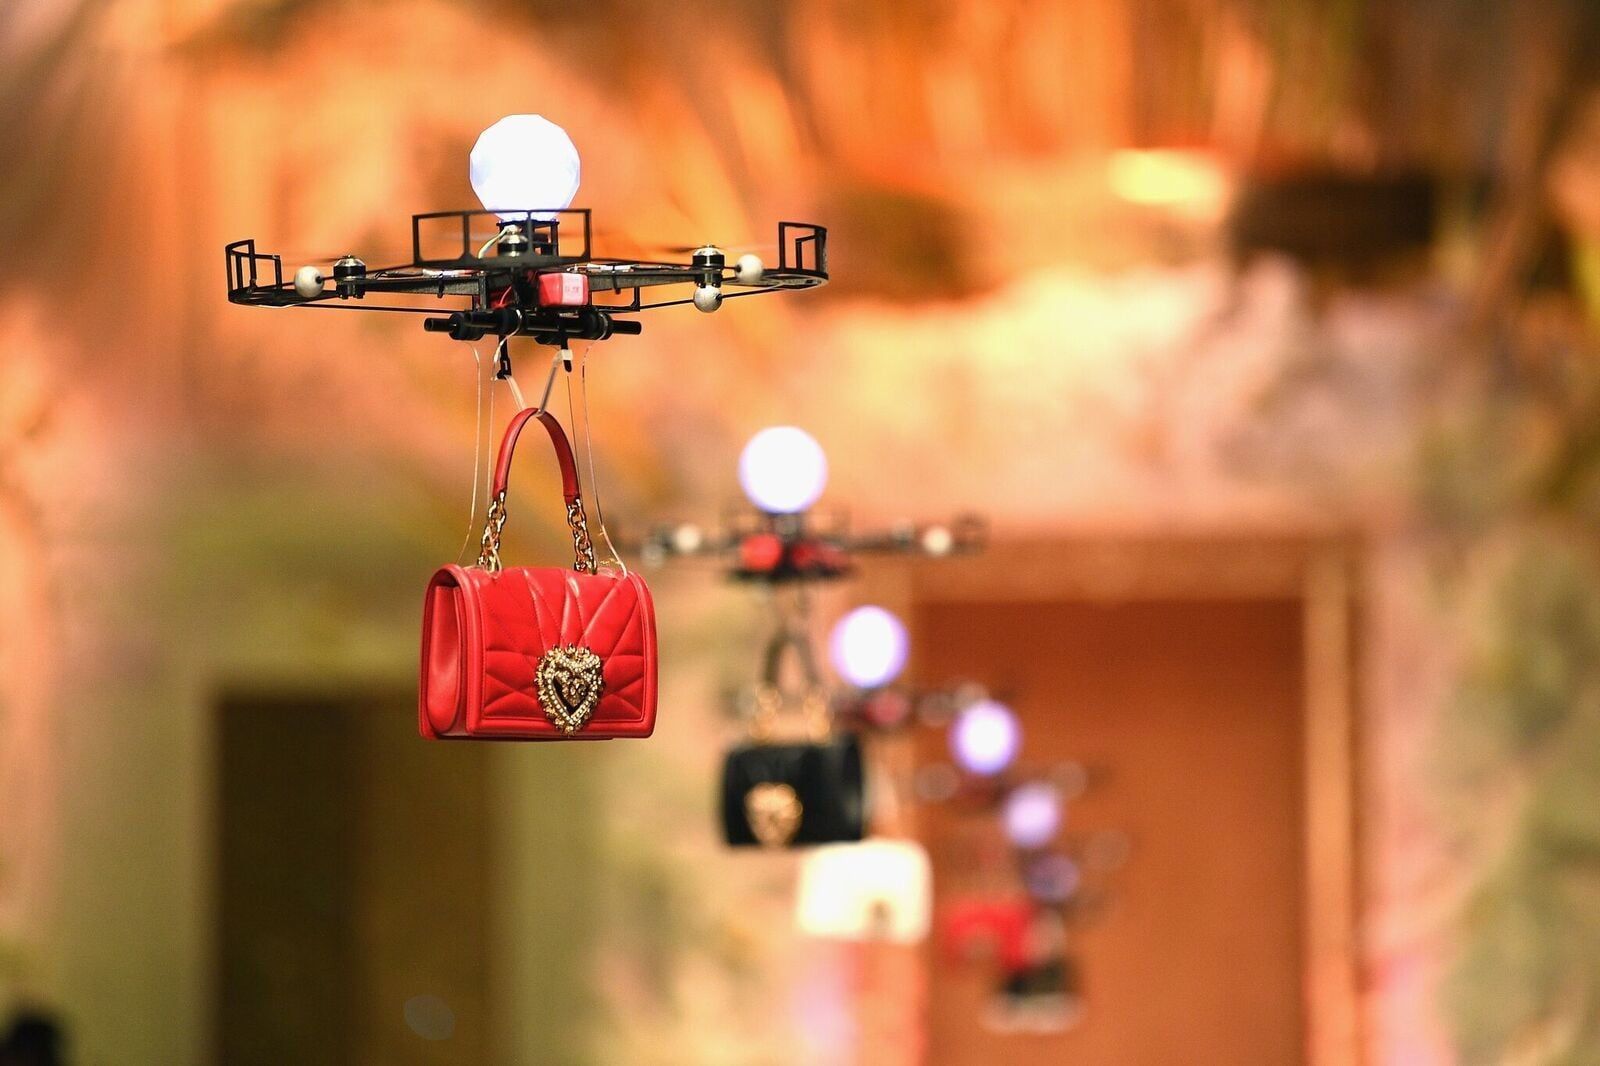 Dolce & Gabbana is using drones to model its handbags at Milan Fashion Week.